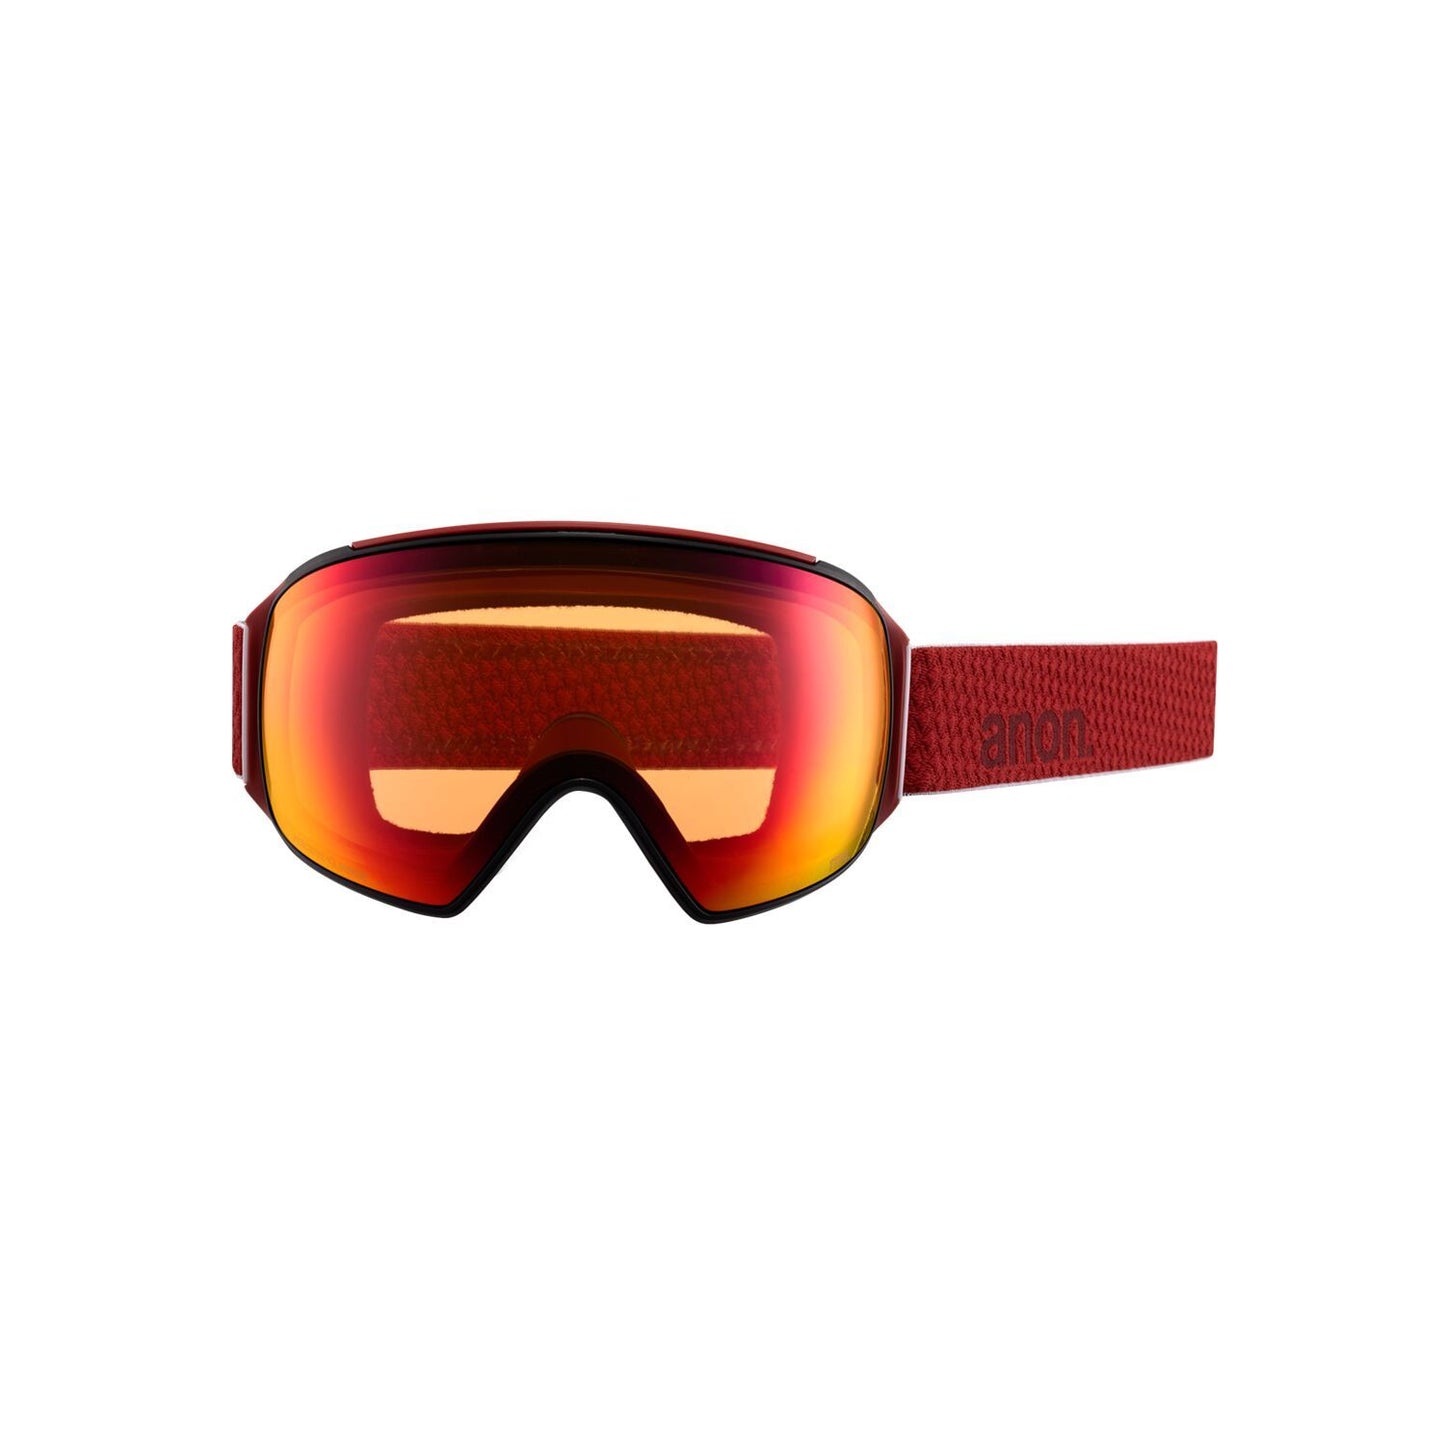 Anon M4 Toric Goggles + Bonus Lens + MFI Face Mask - Low Bridge Fit Mars / Perceive Sunny Red Snow Goggles